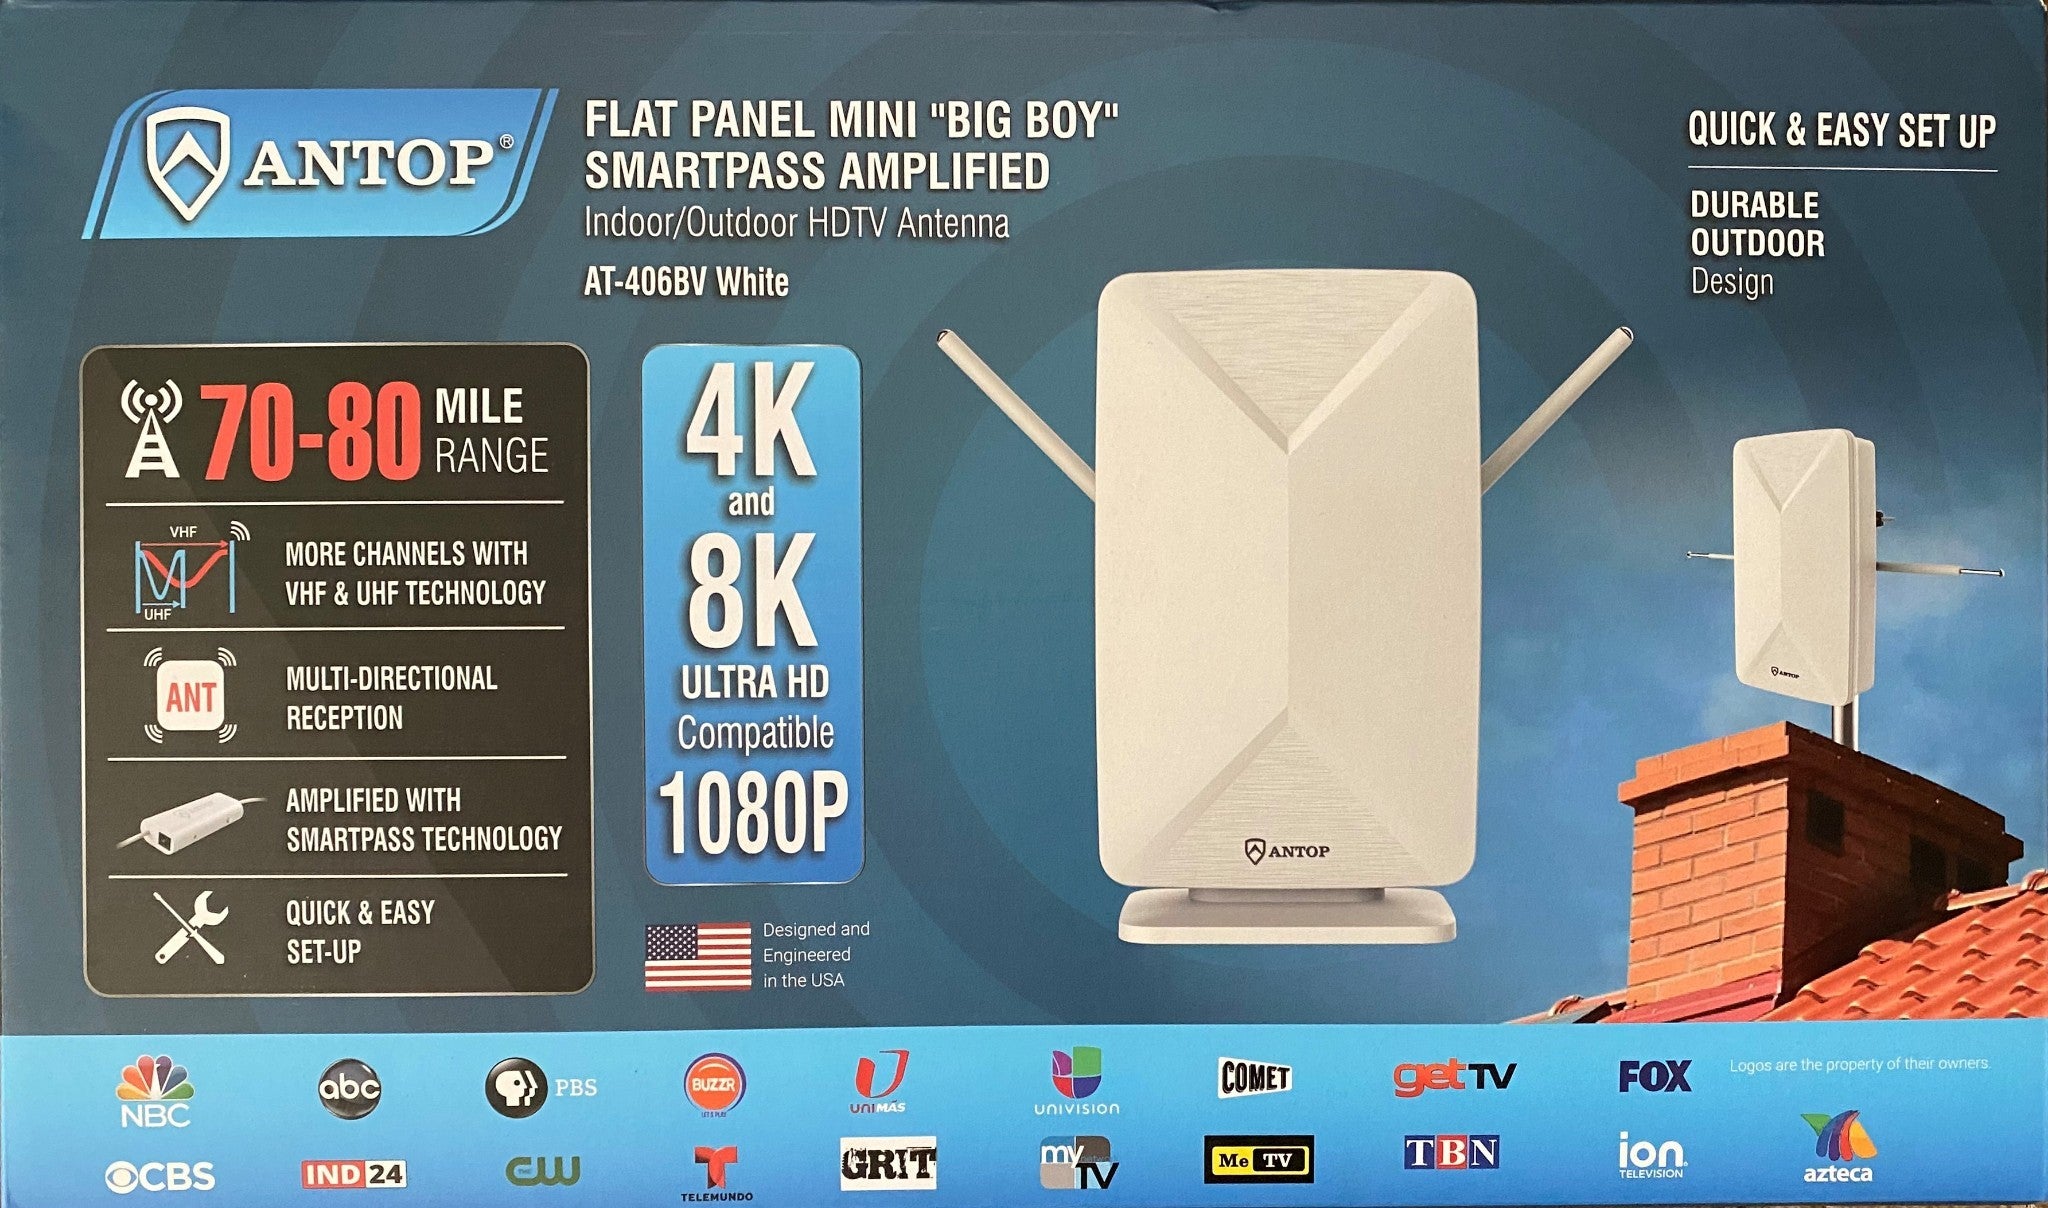 ANTOP Mini "Big Boy" AT-406BV Indoor/Outdoor Smartpass Amplified HDTV Antenna